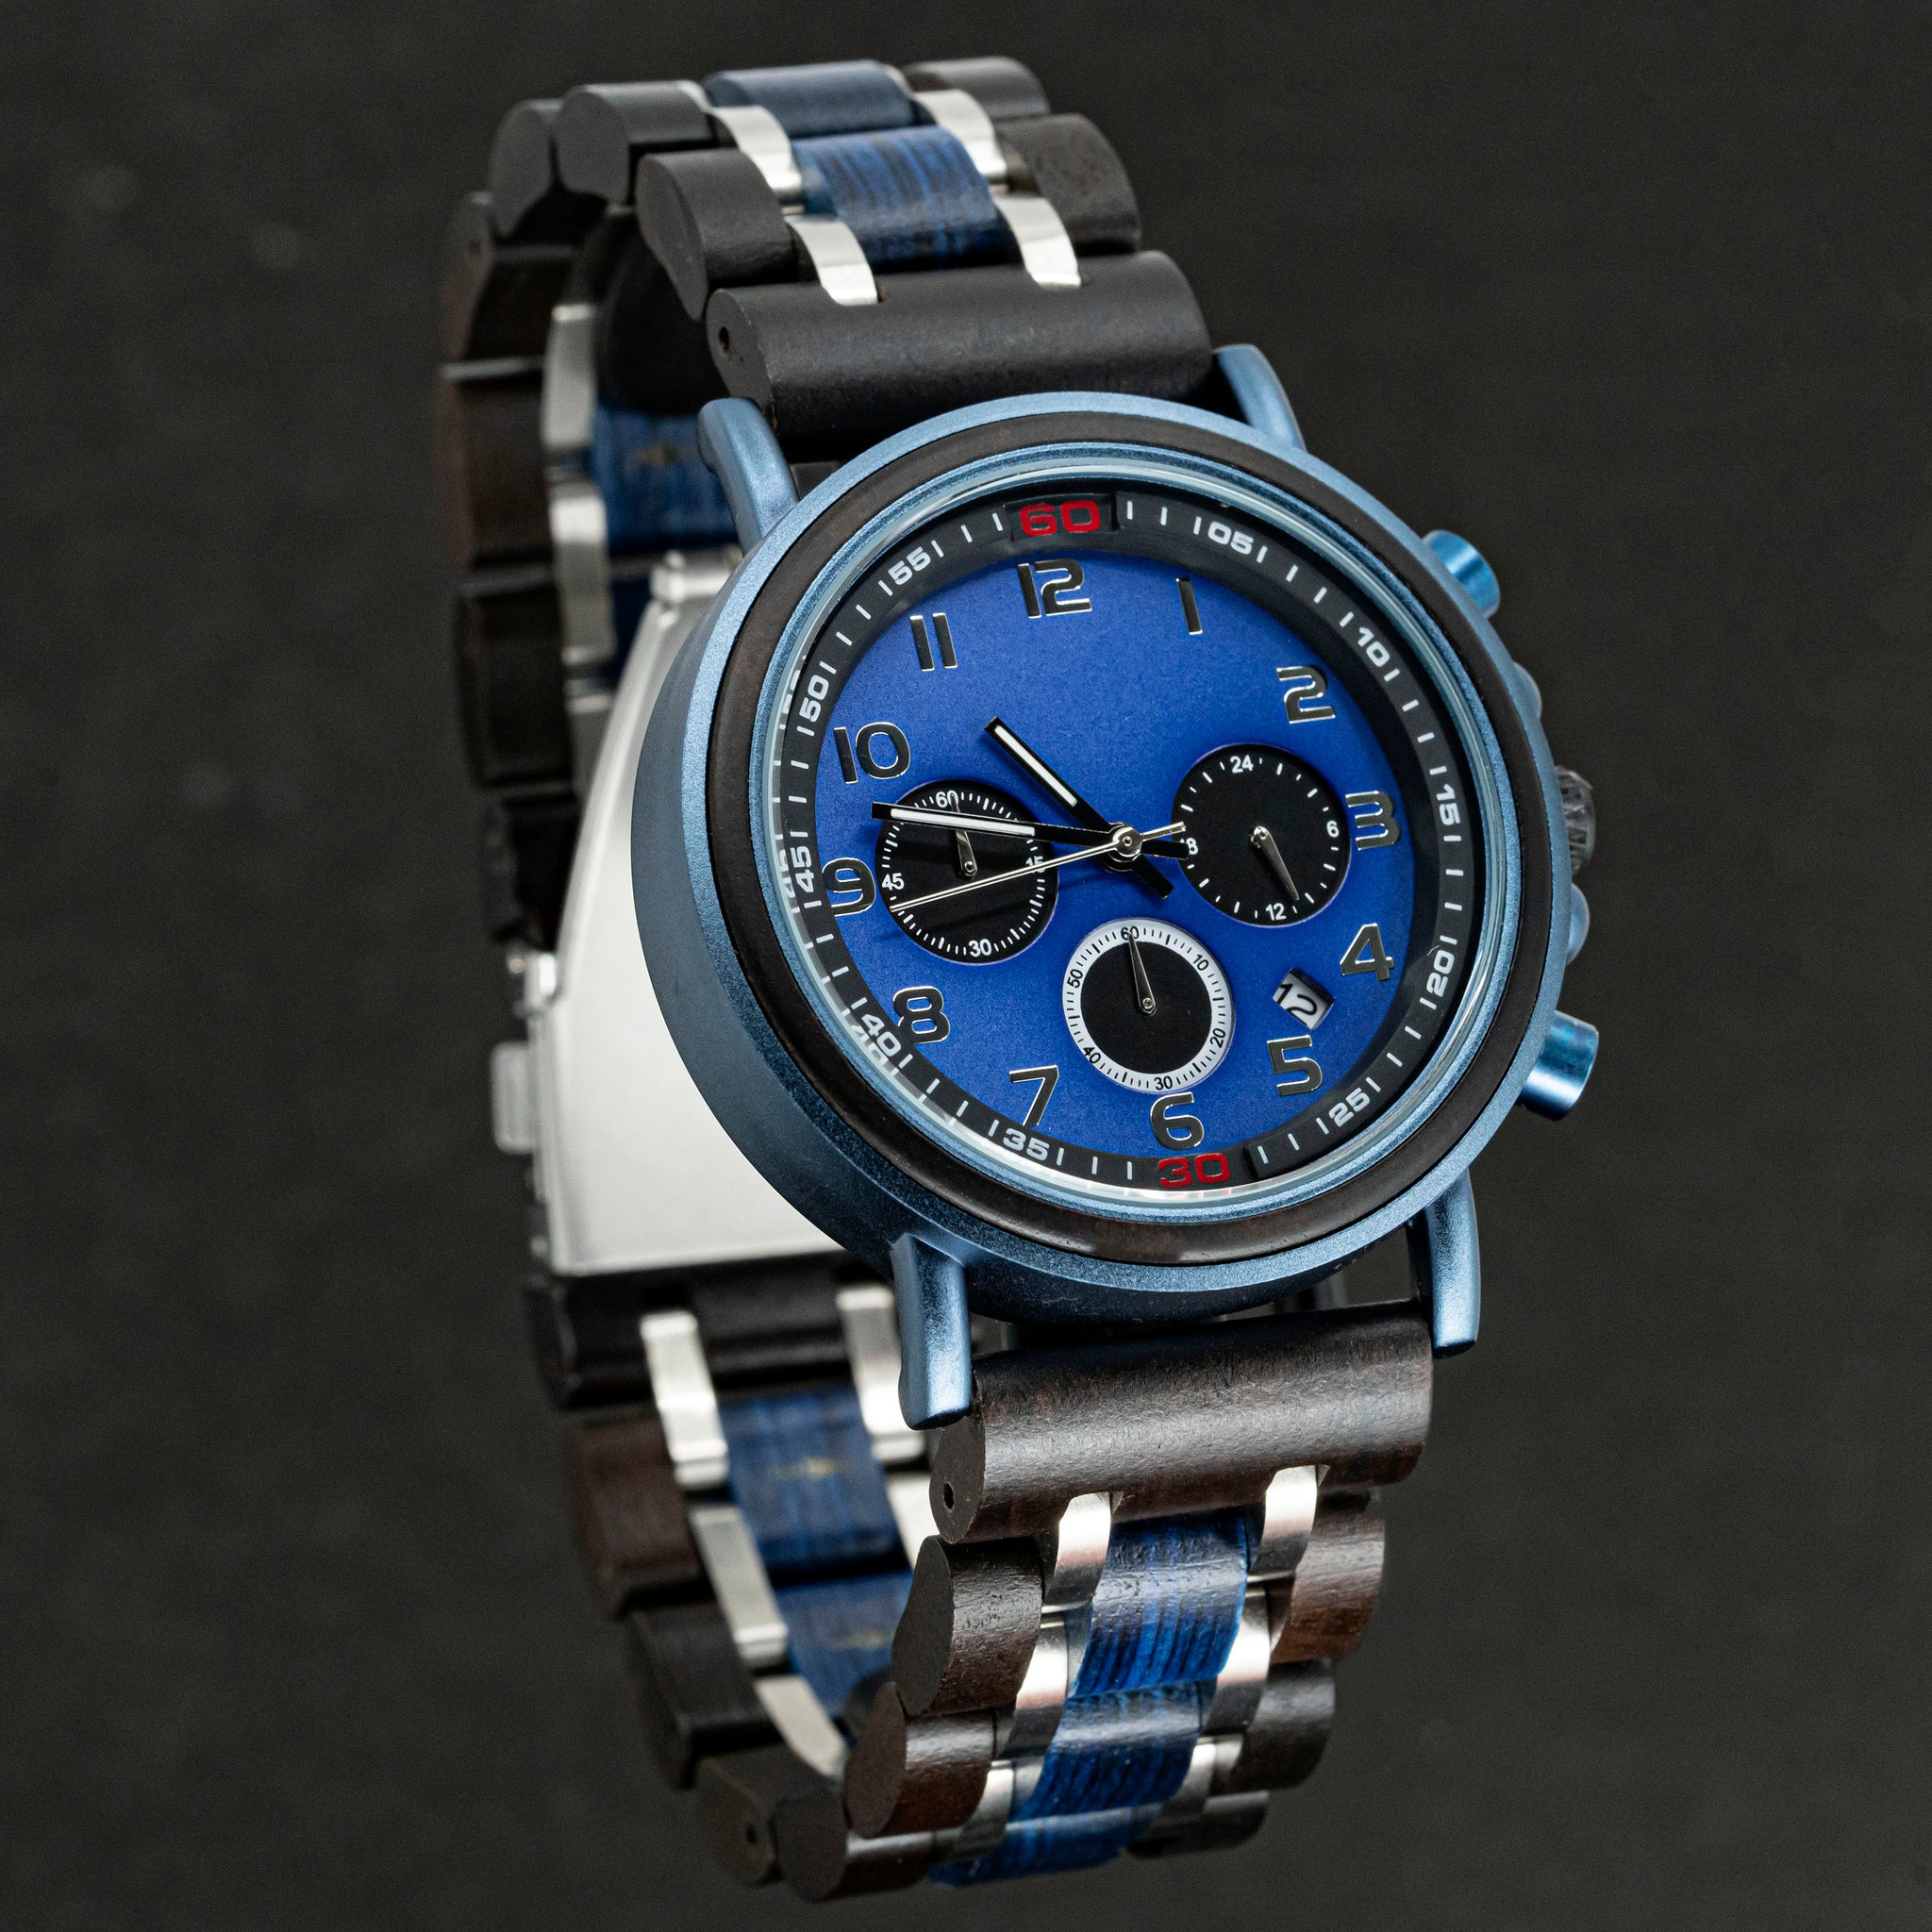 Sea Master - TimberWood navy blue wooden watch